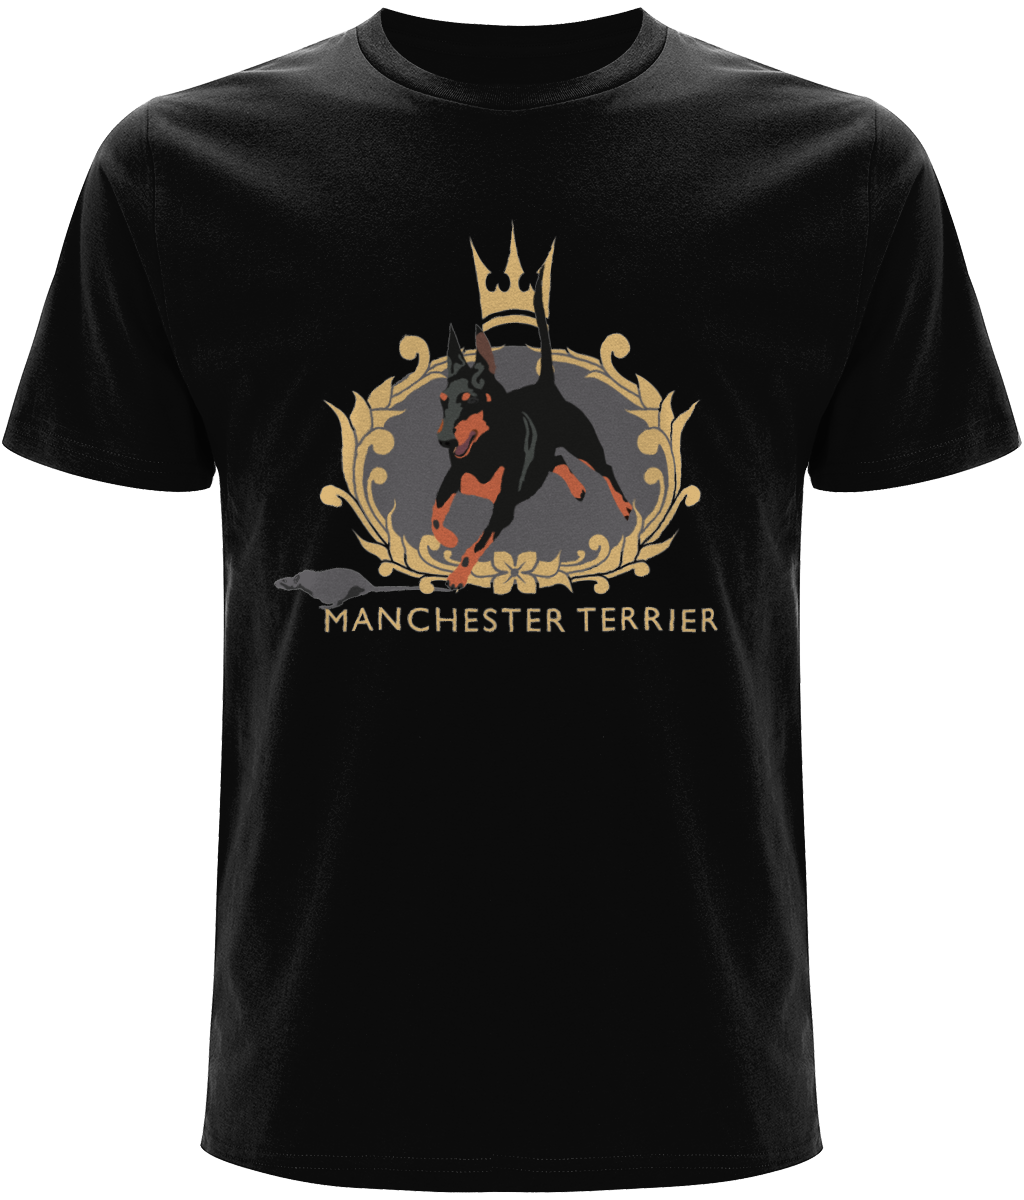 Manchester Terrier King of Ratting Unisex T Shirt